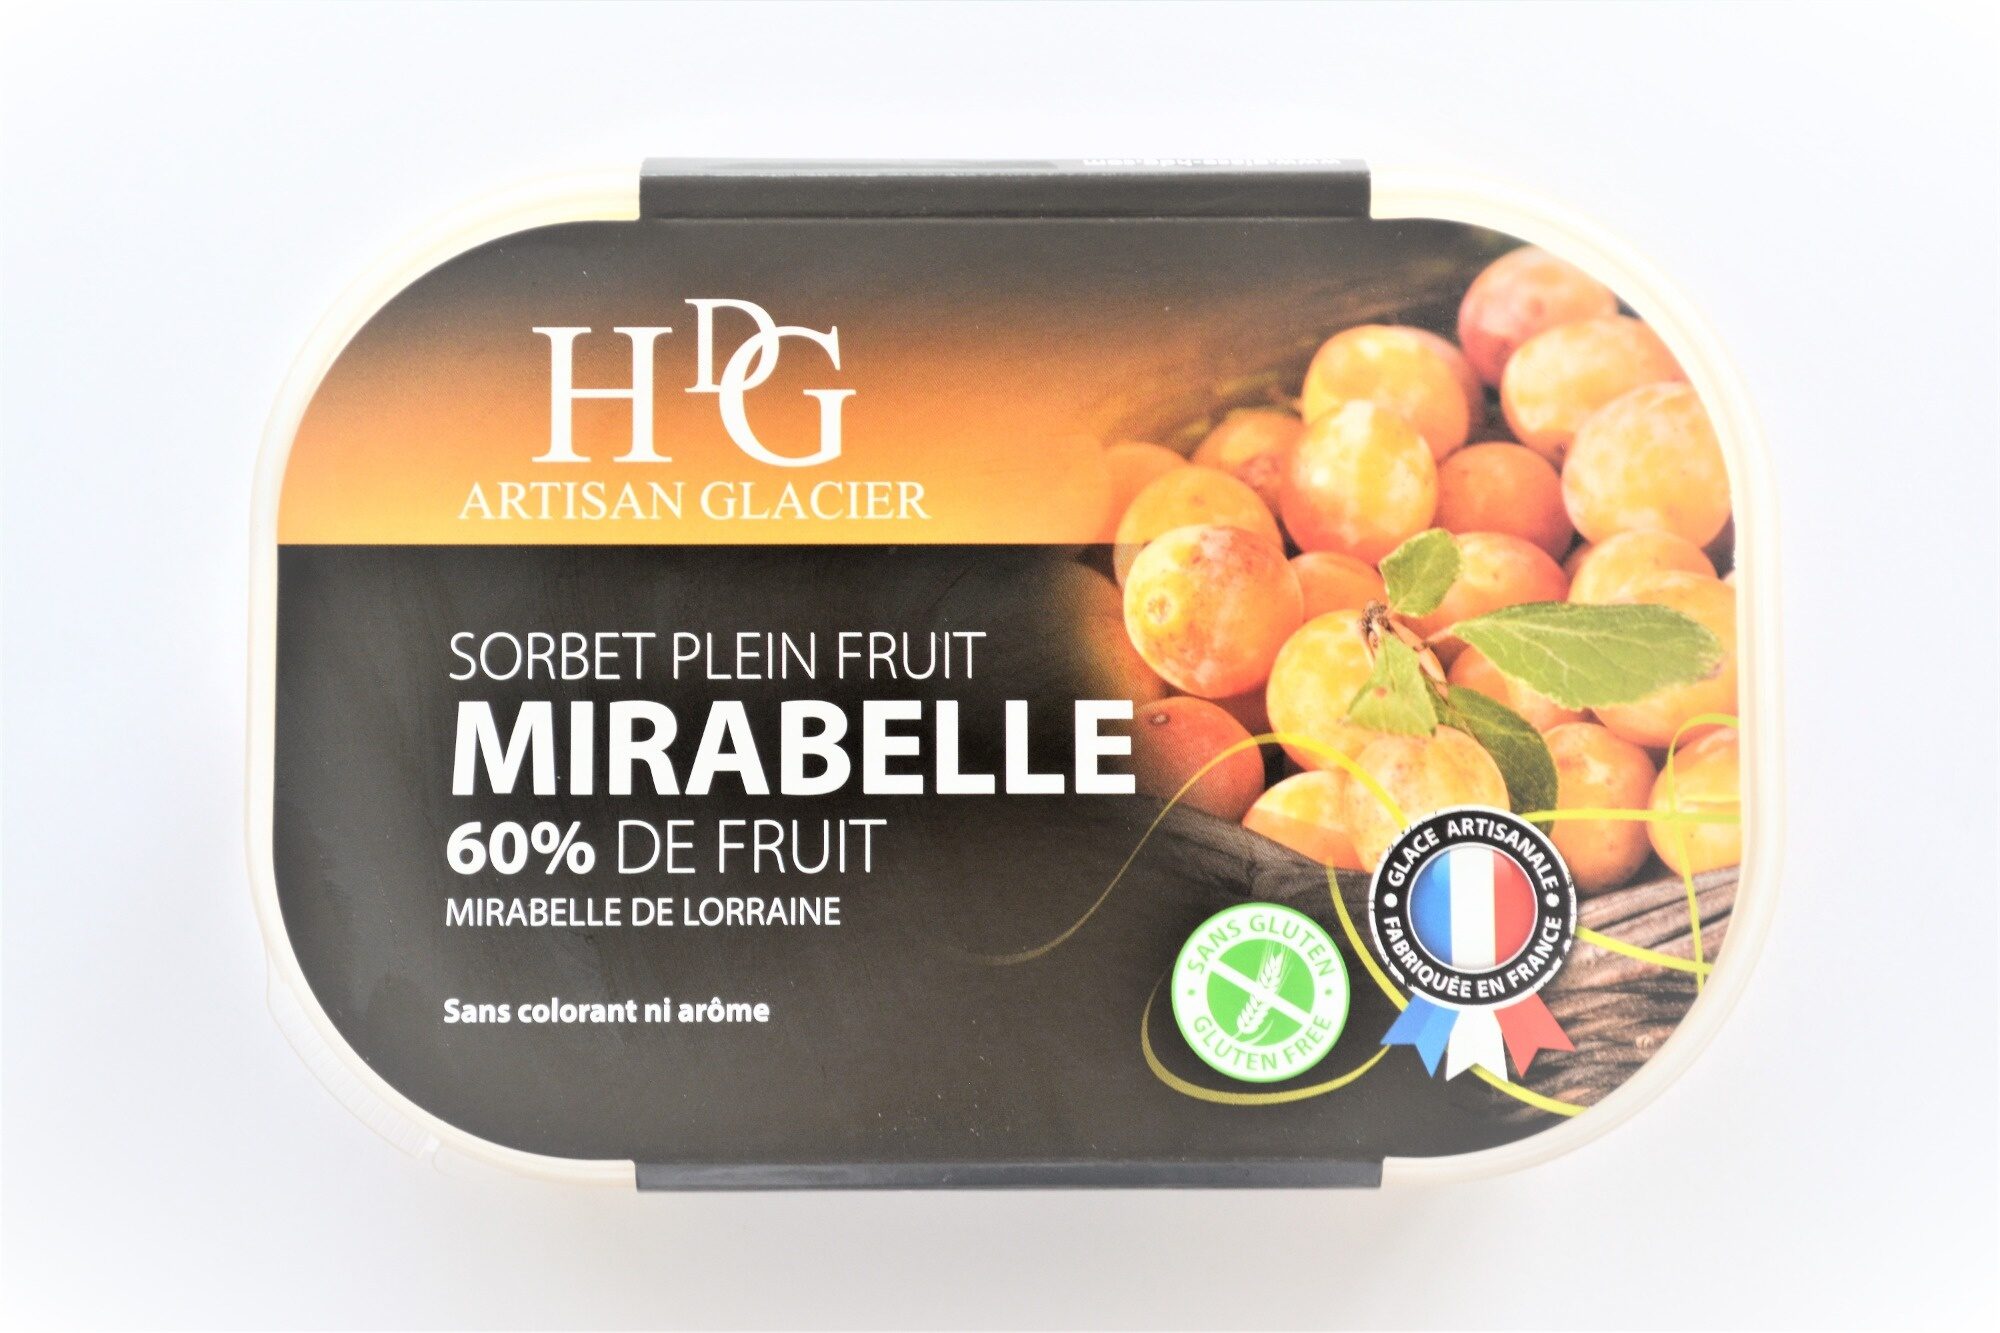 Sorbet plein fruit MIRABELLE DE LORRAINE IGP, 60% de fruit - Product - fr